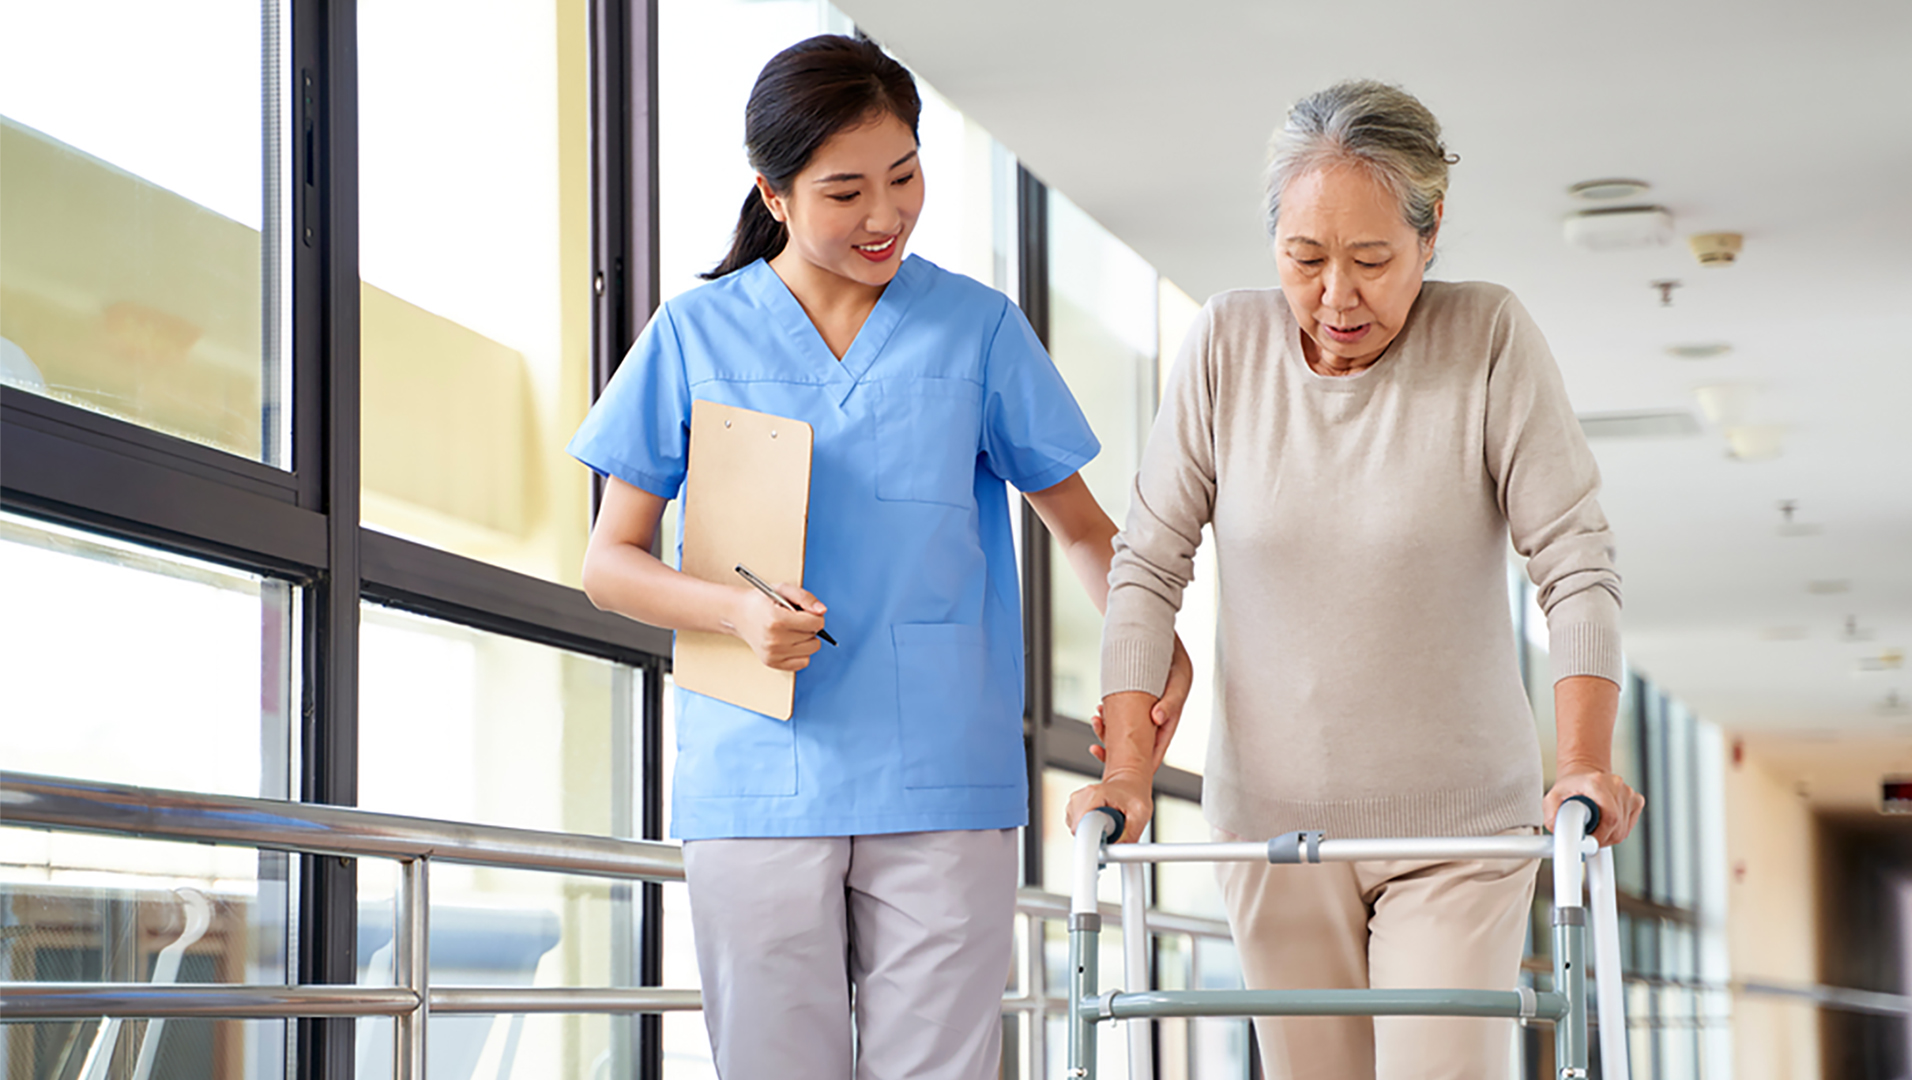 A nurse walks with an elderly patient